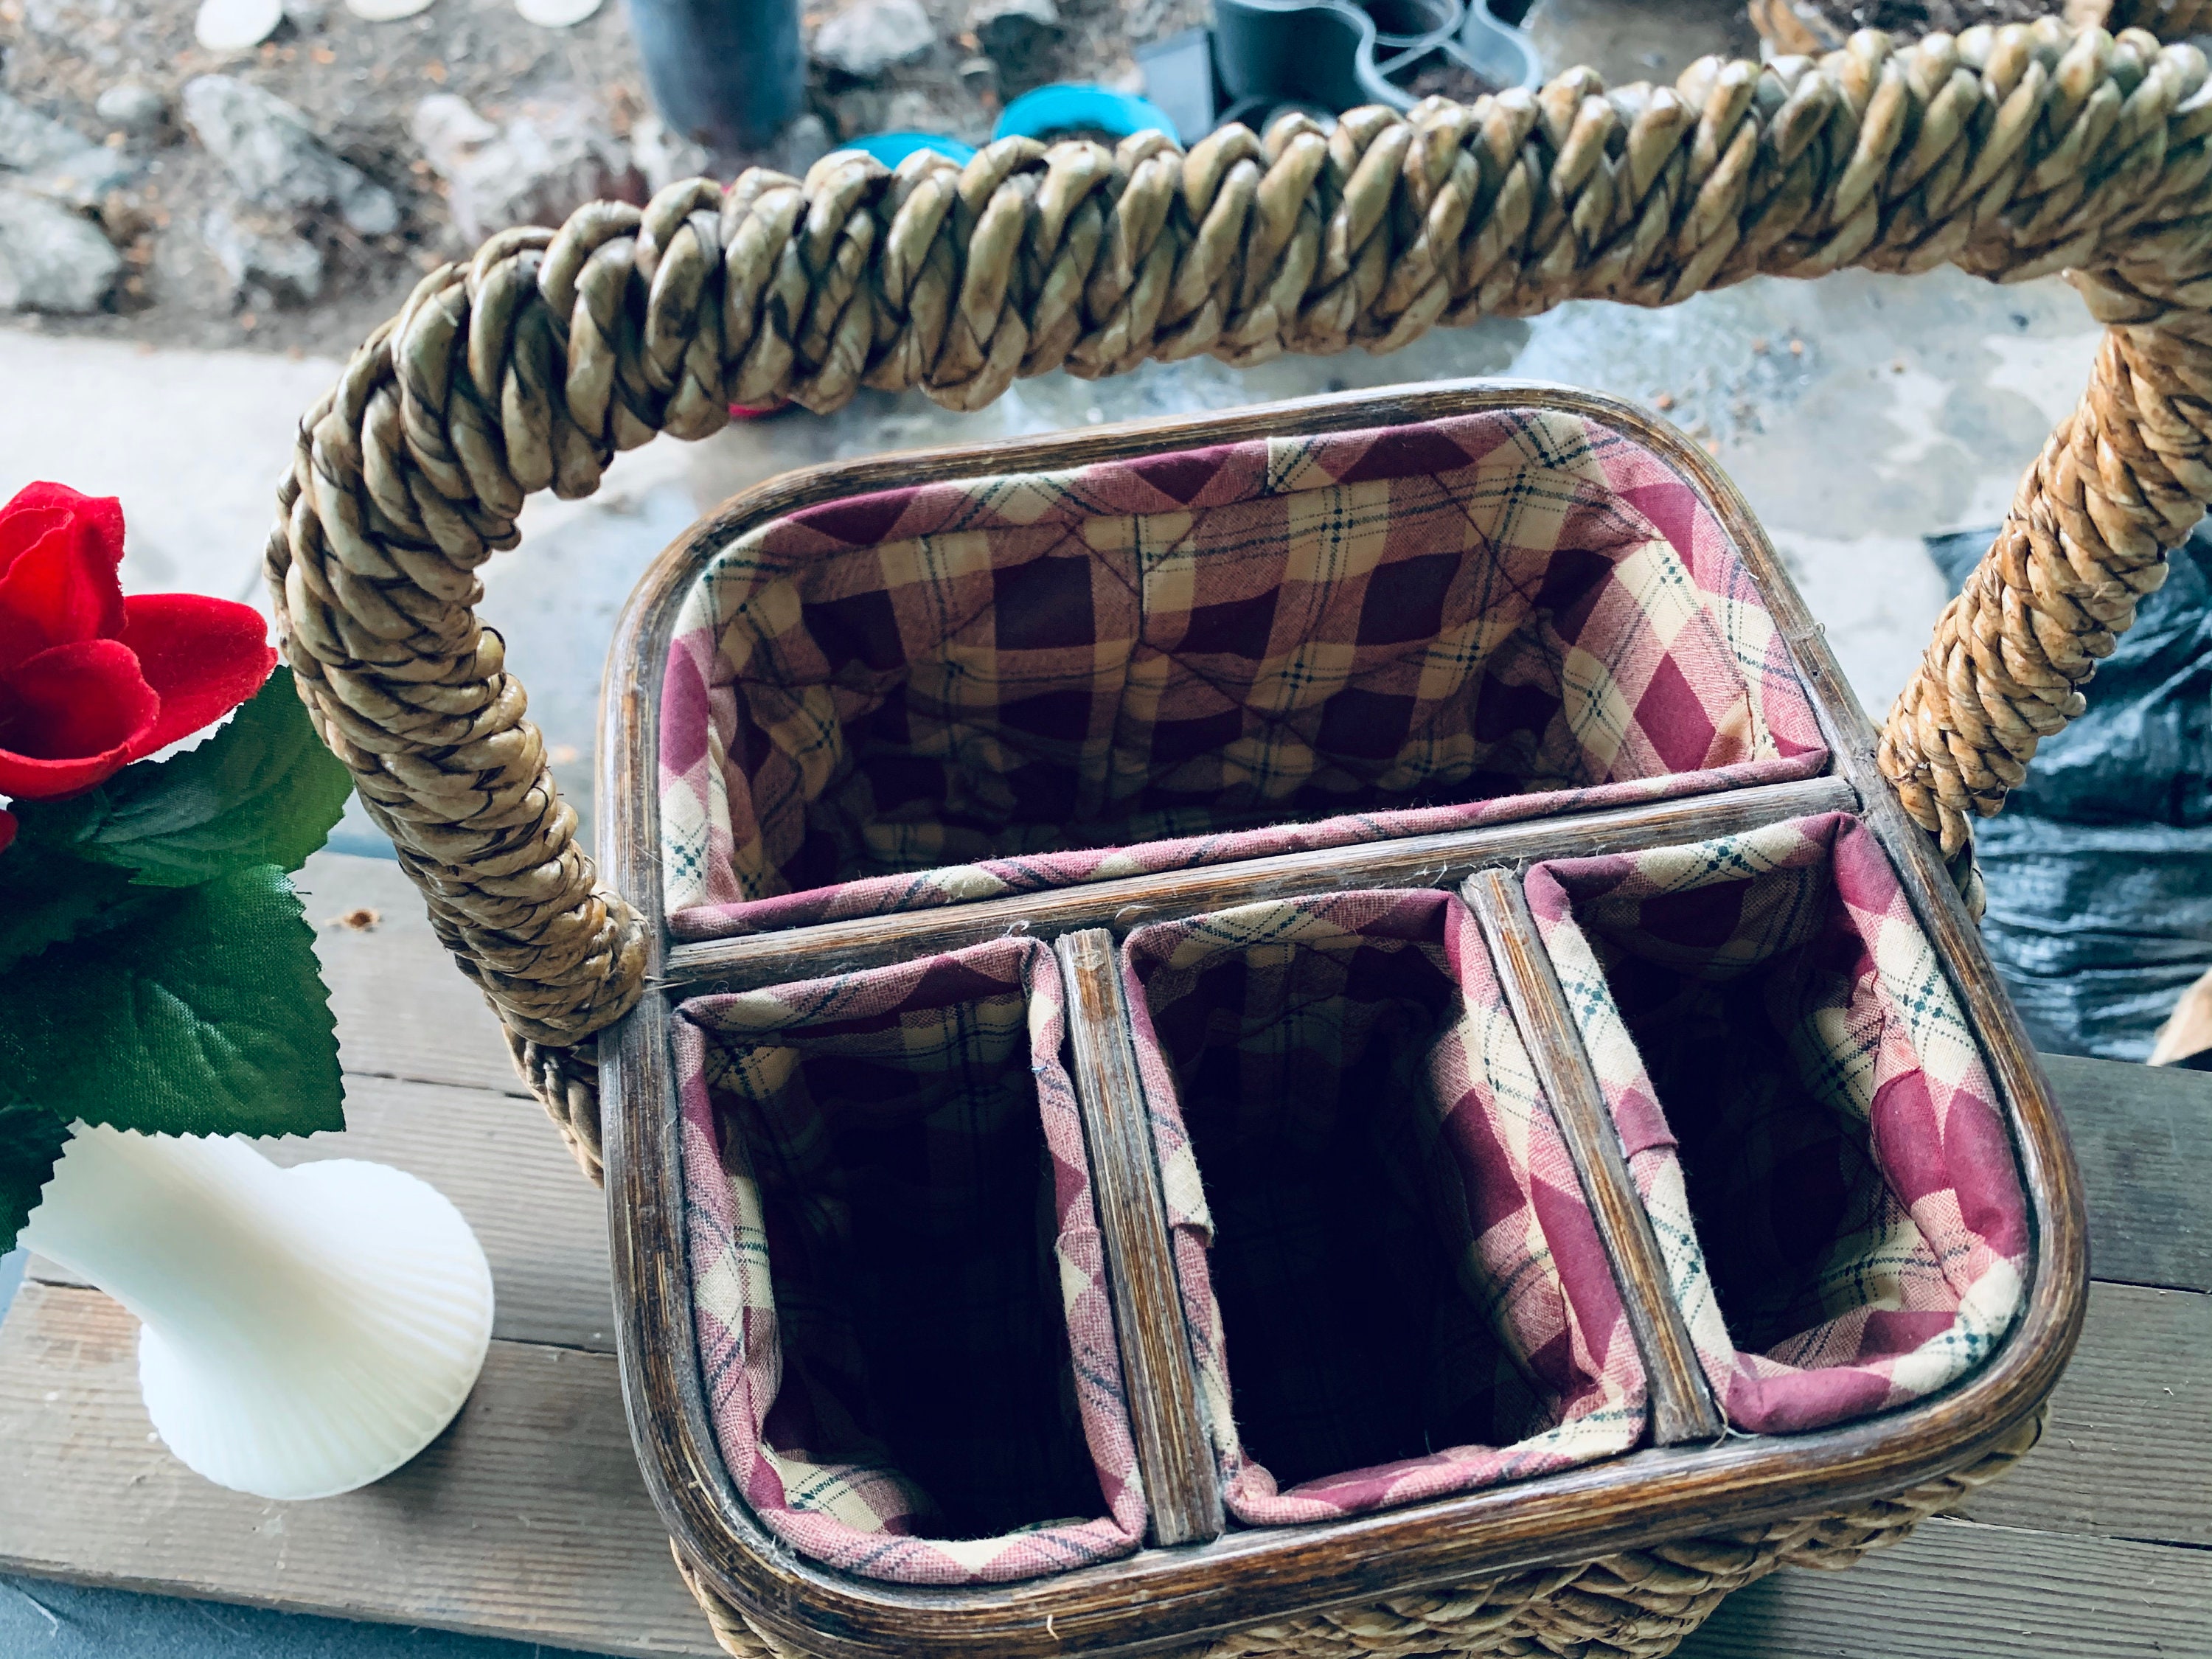 Macddy Rattan Flower Basket,Wicker Rattan Flower Basket Handwoven Portable Picnic Storage Organizer for Picnic 